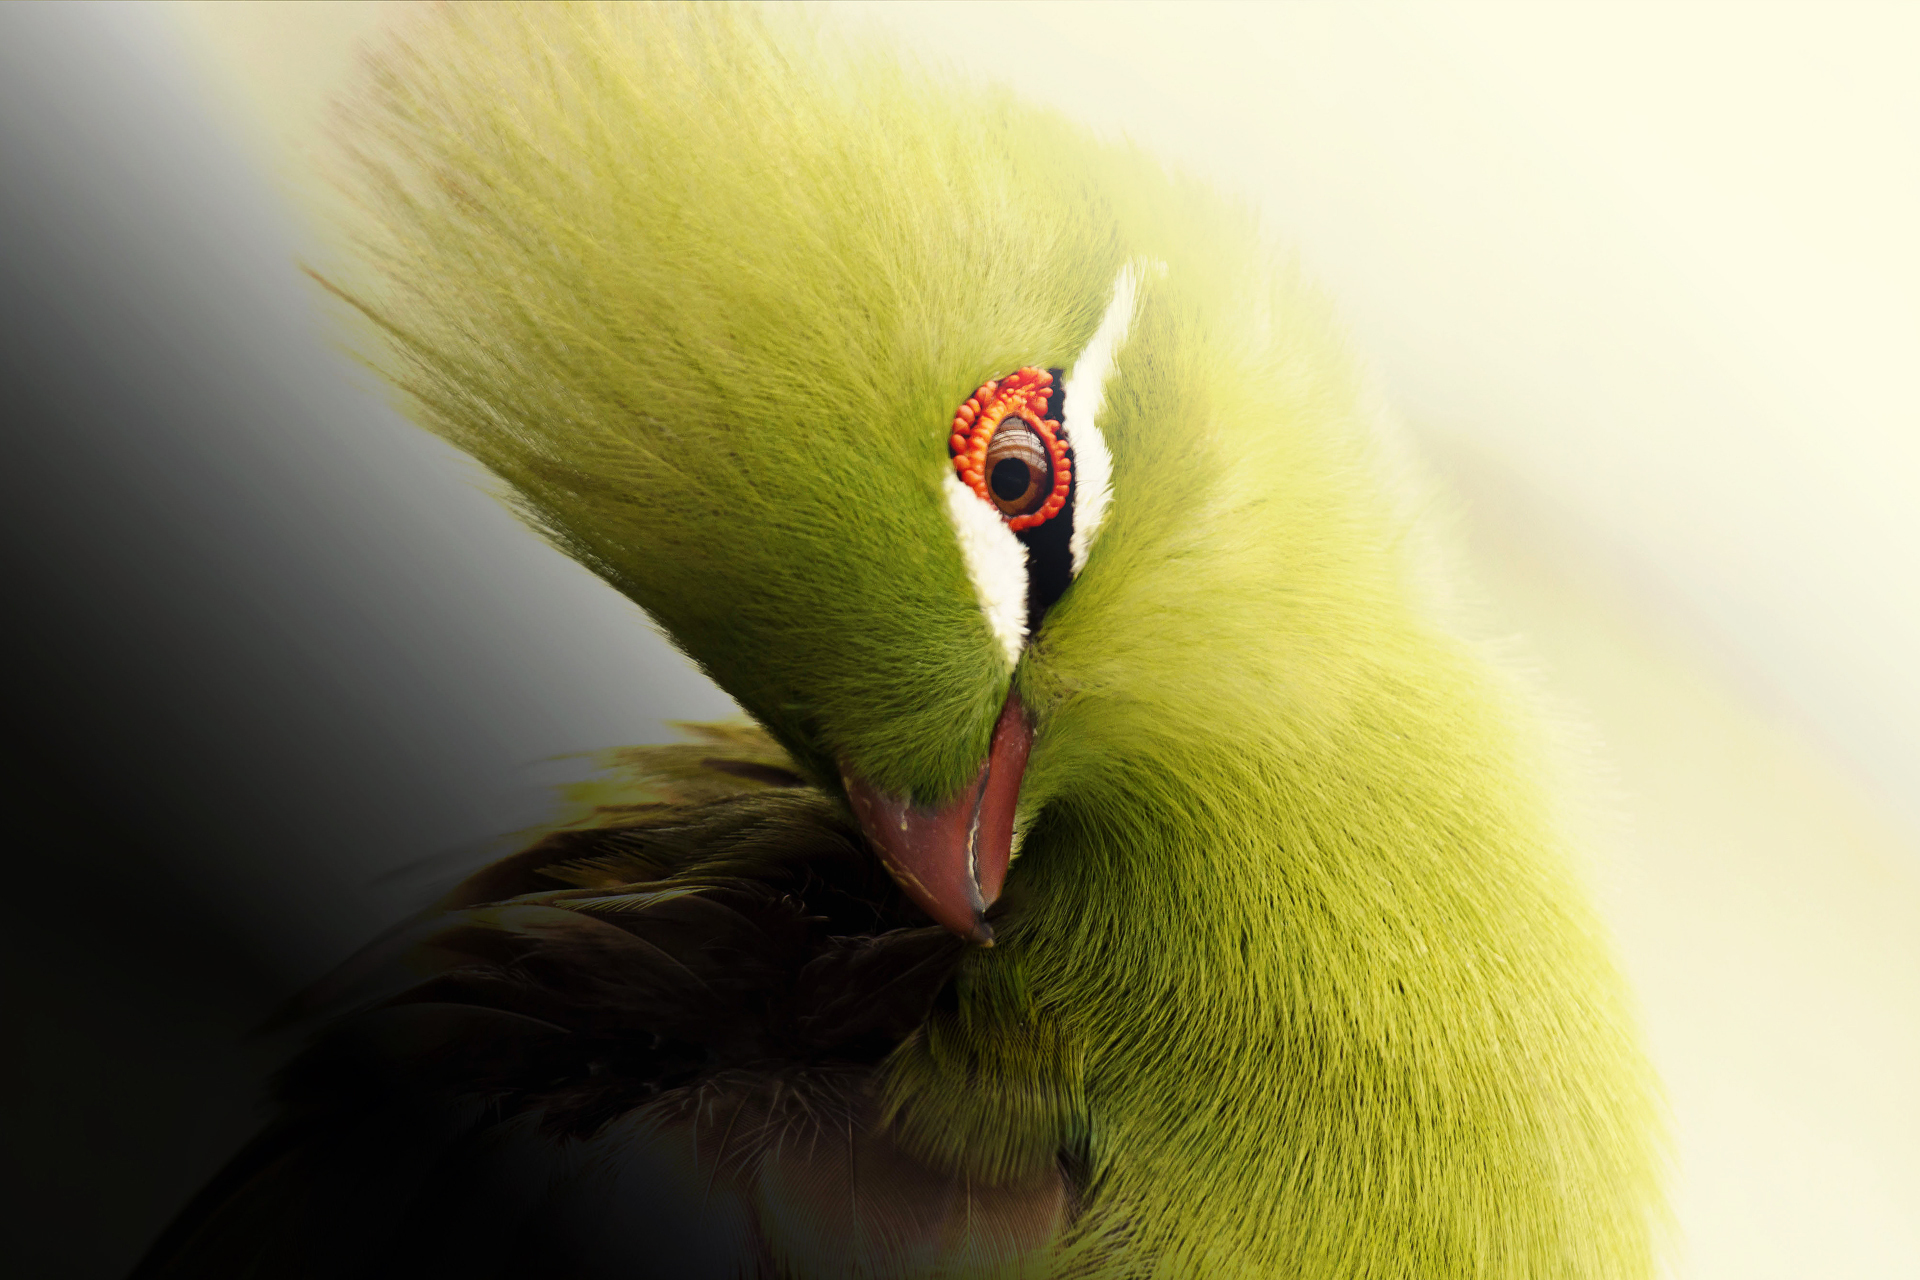 meilleur fond d'écran d'oiseau,vert,jaune,fermer,macro photographie,oiseau